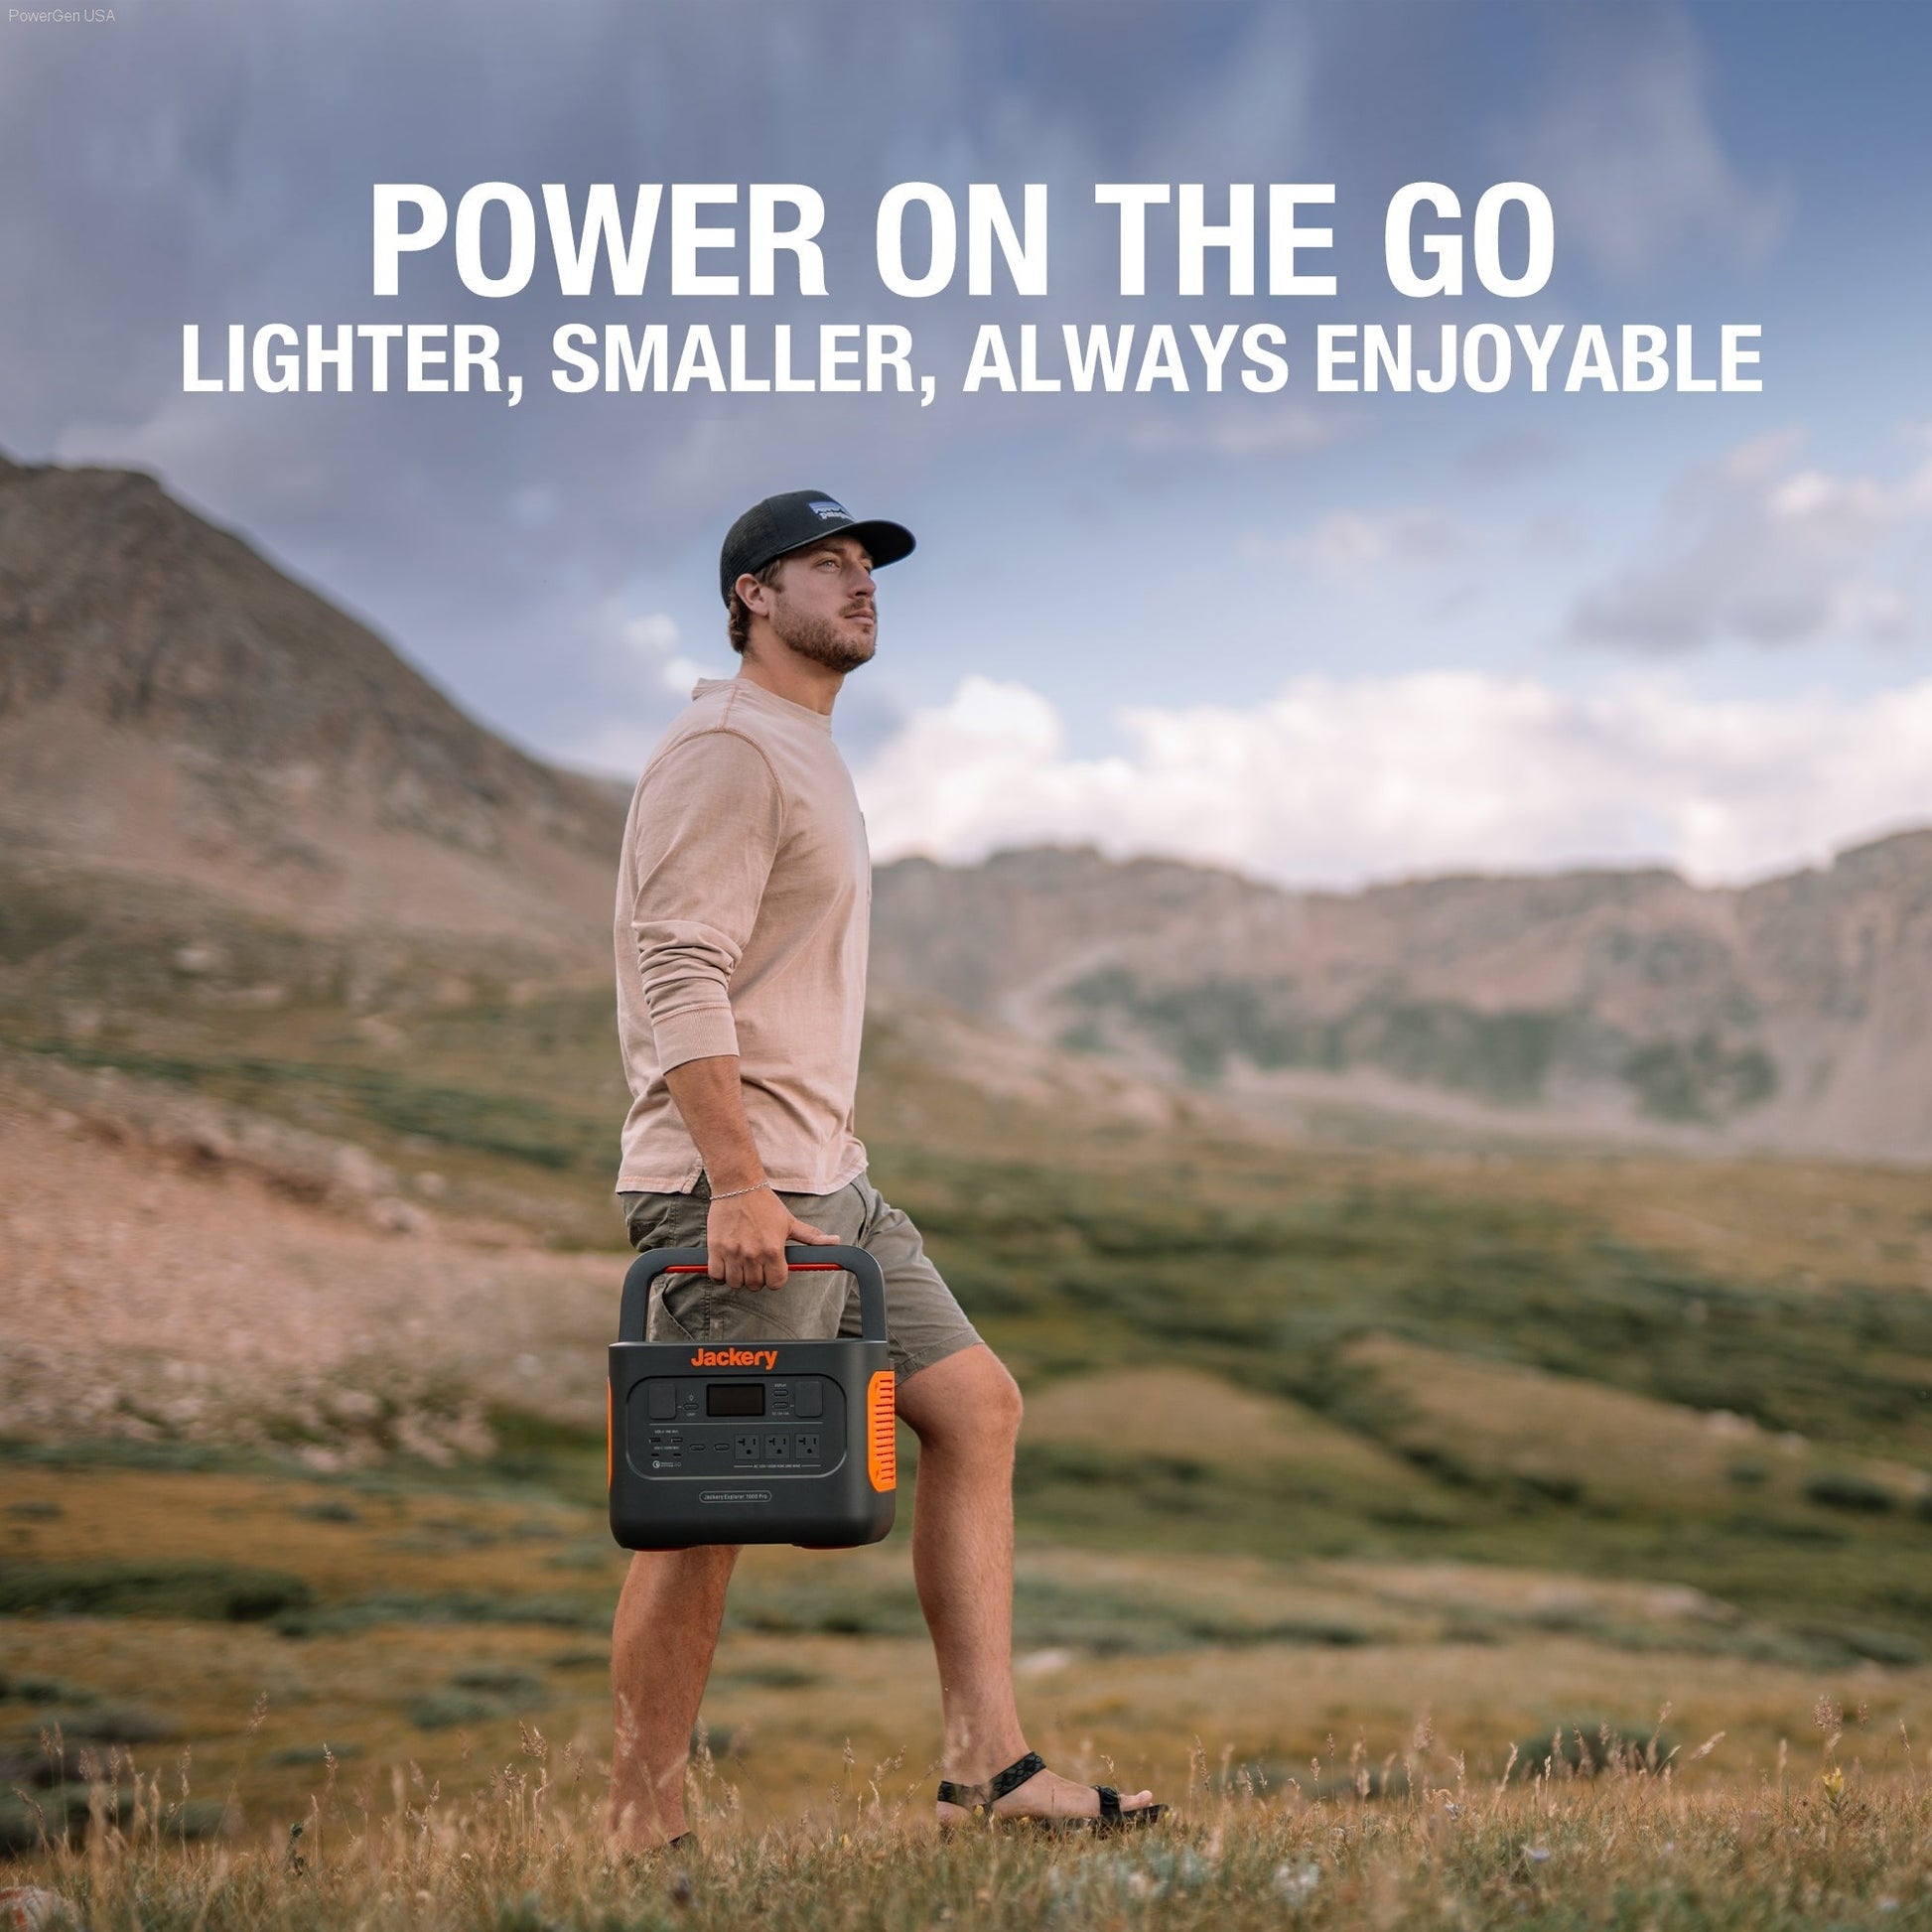 Solar & Battery Powered - Jackery Explorer 1000 Pro Portable Power Station